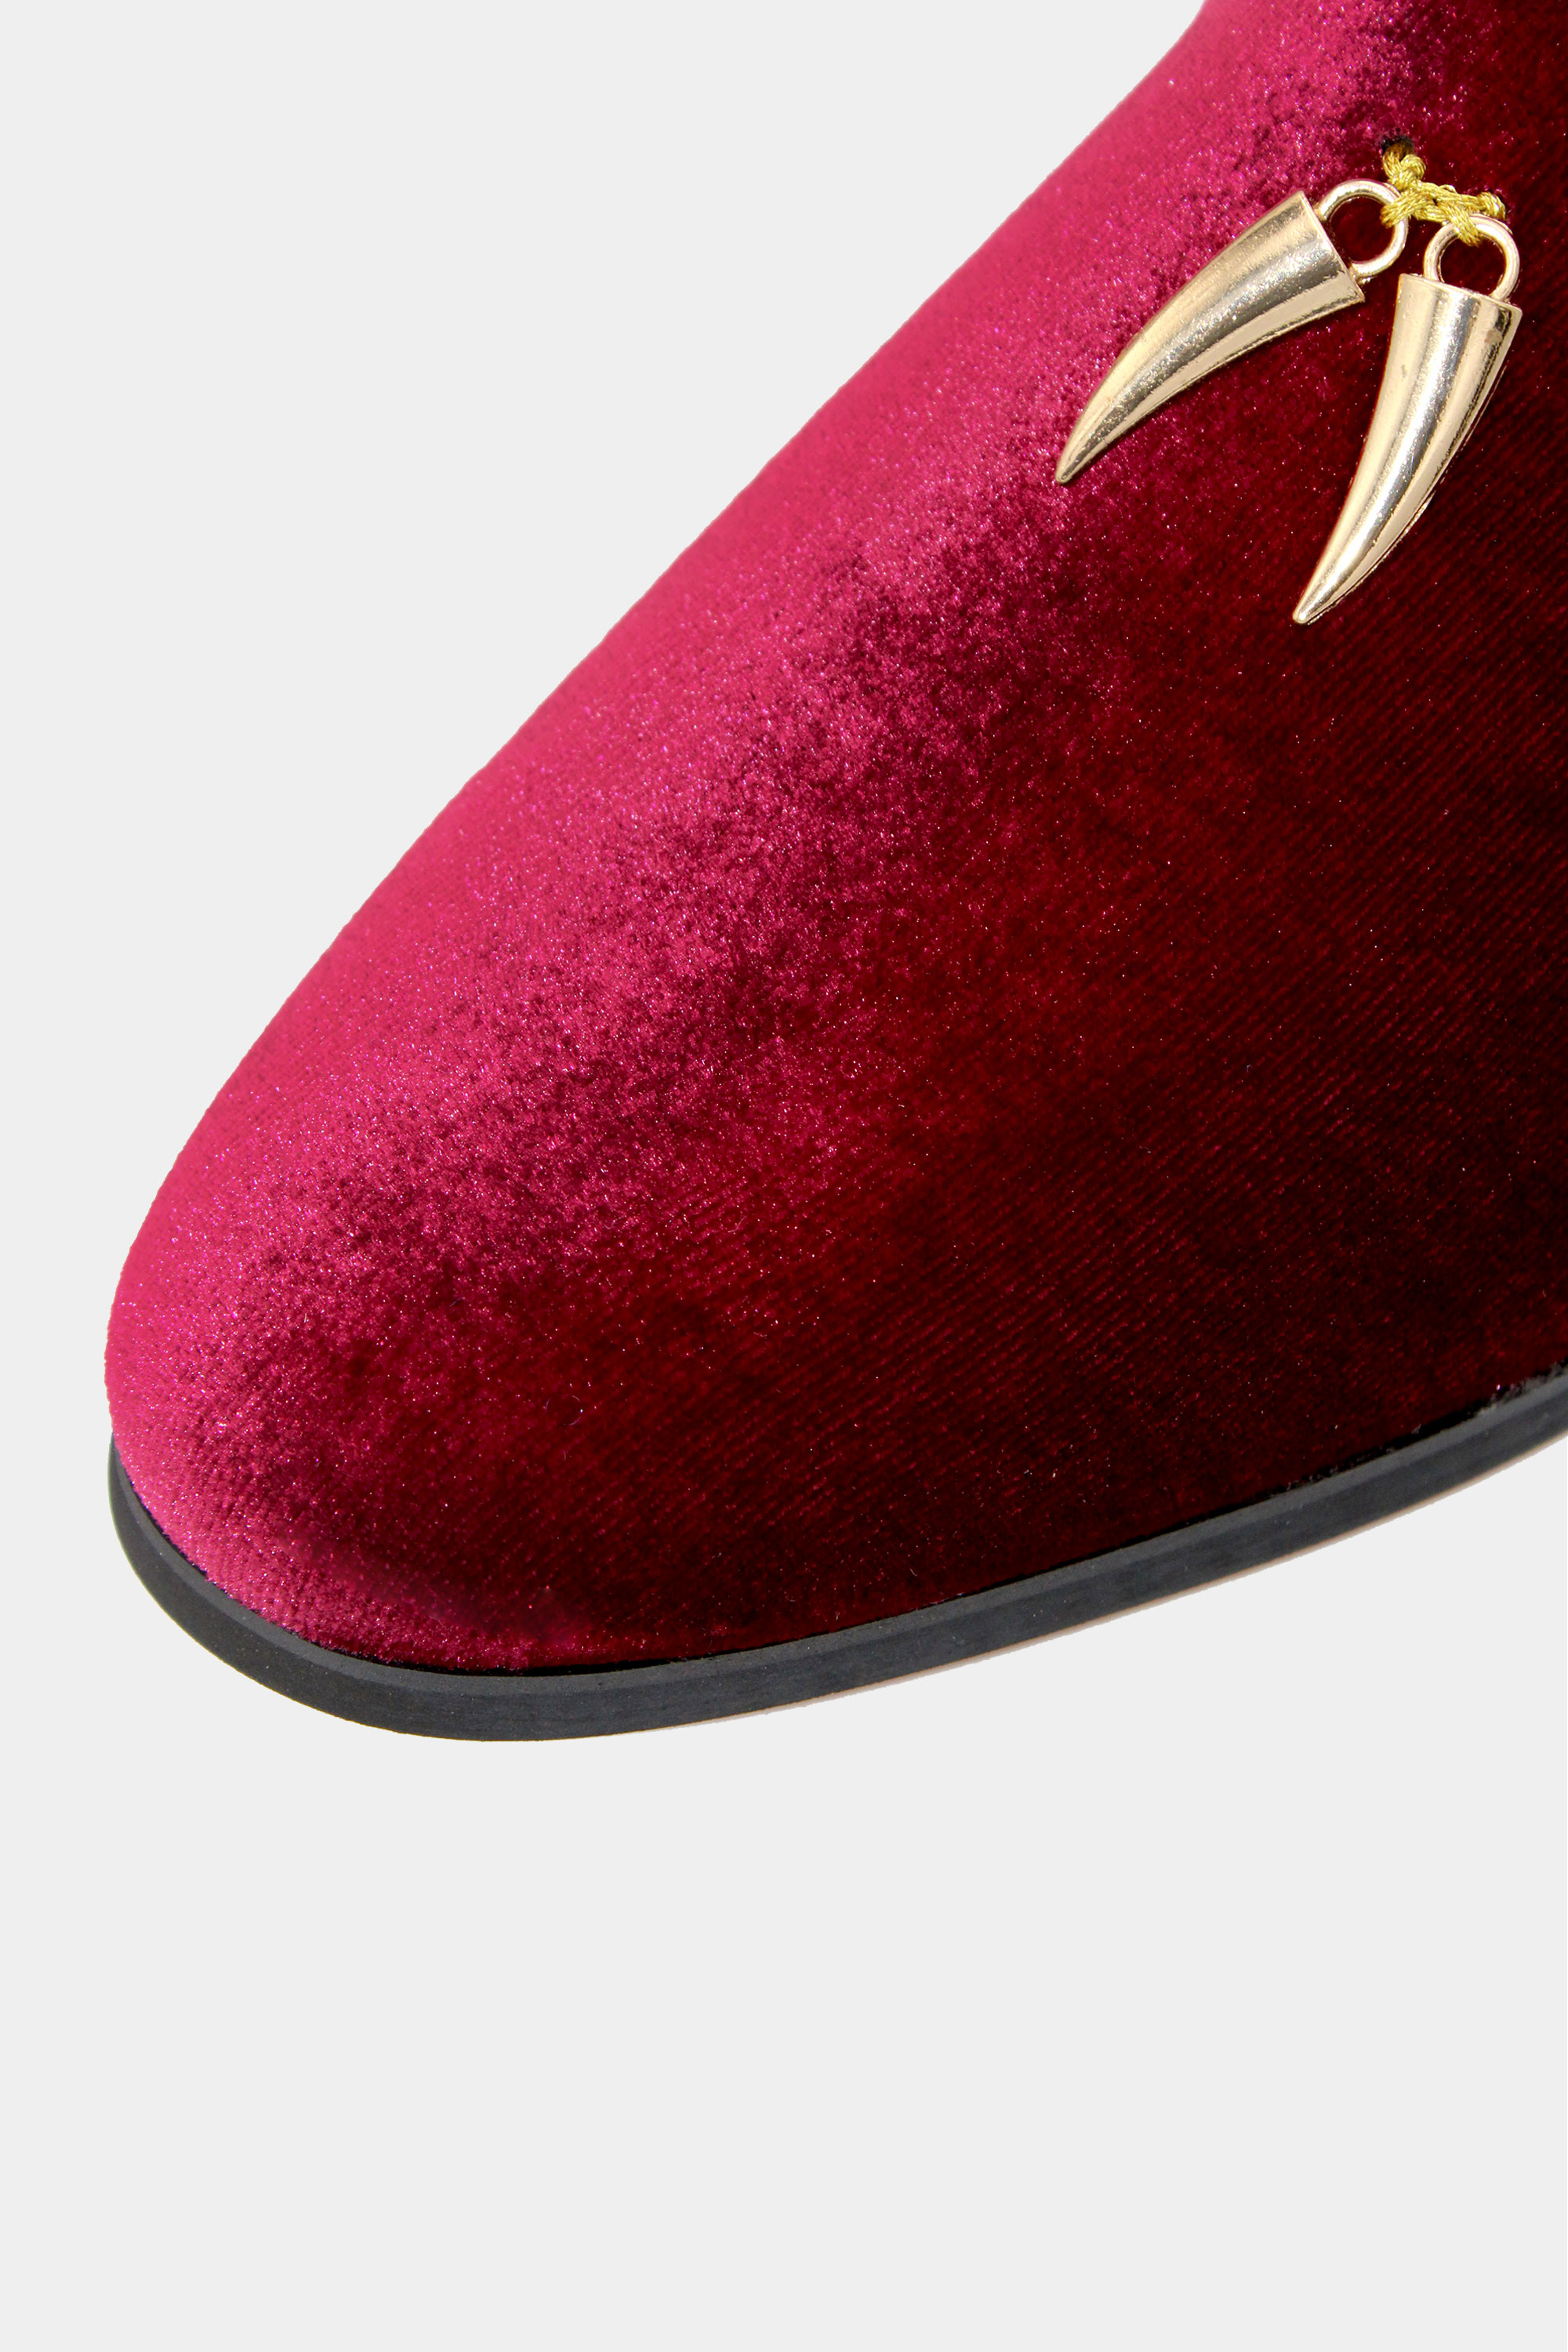 Burgundy-and-Gold-Designer-Loafers-from-Gentlemansguru.com